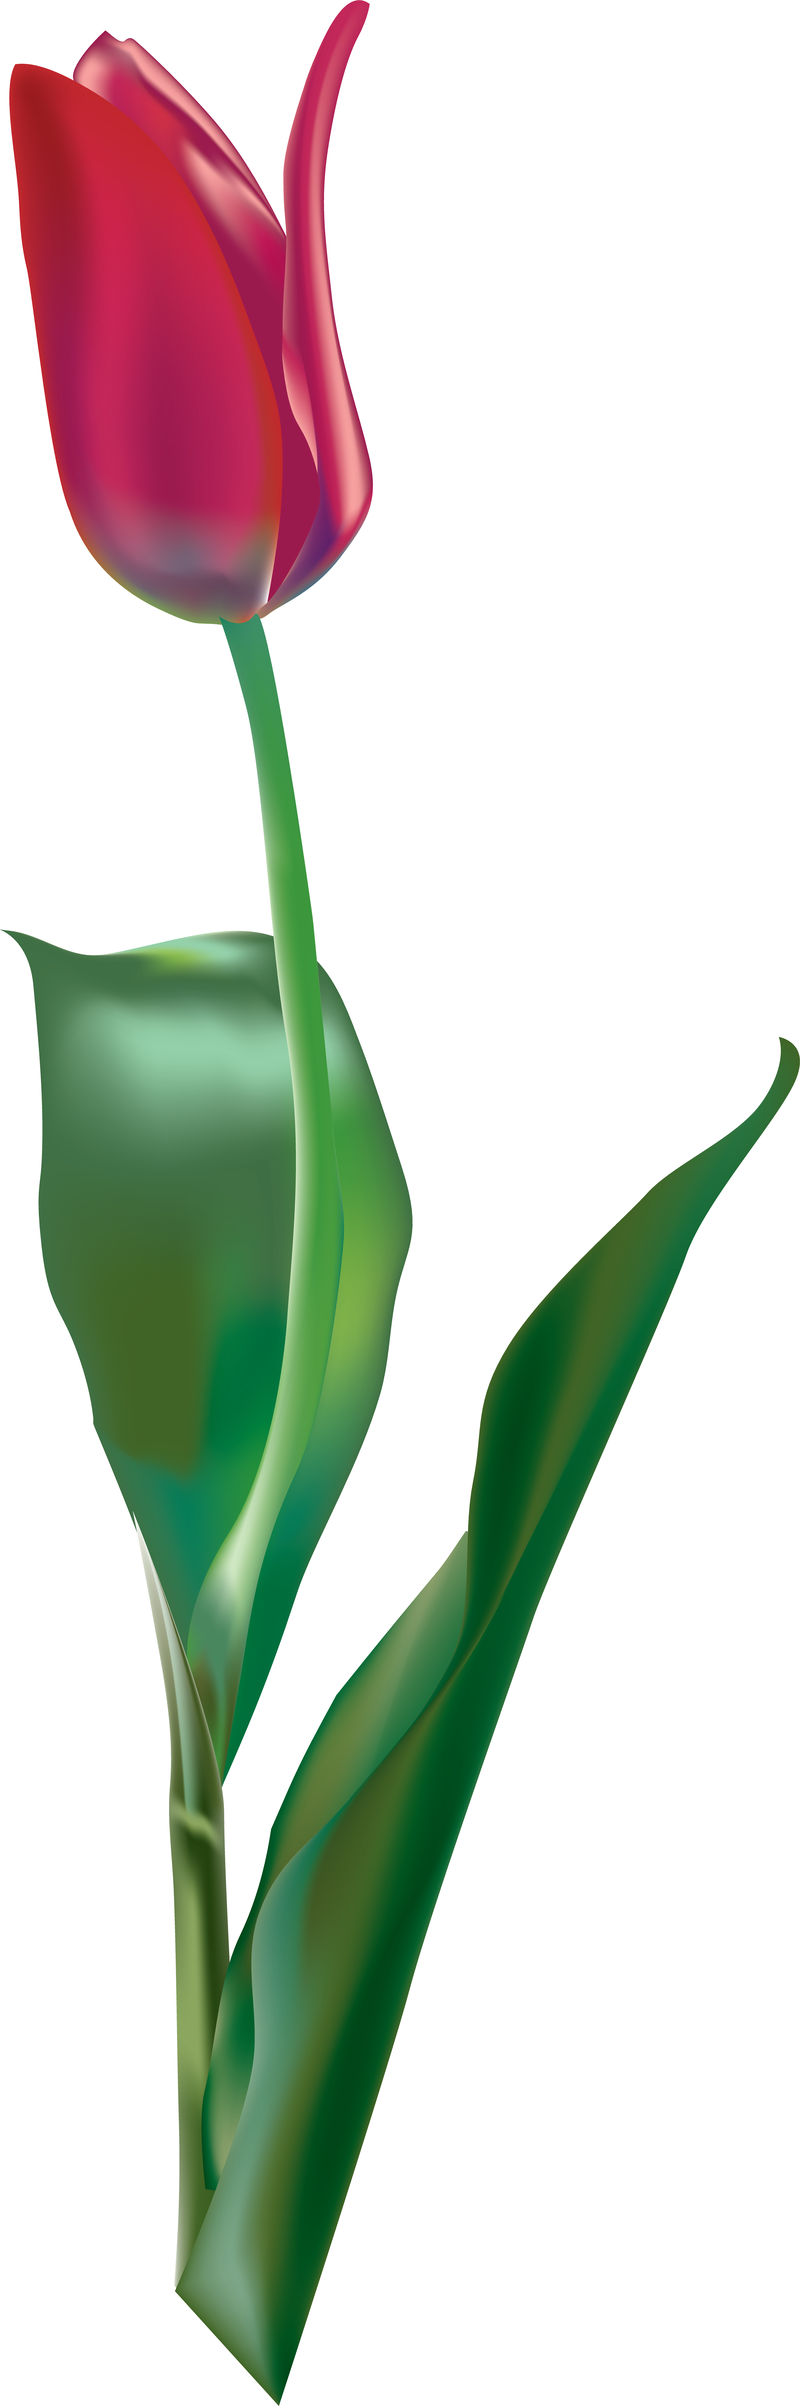 Vetor tulipa